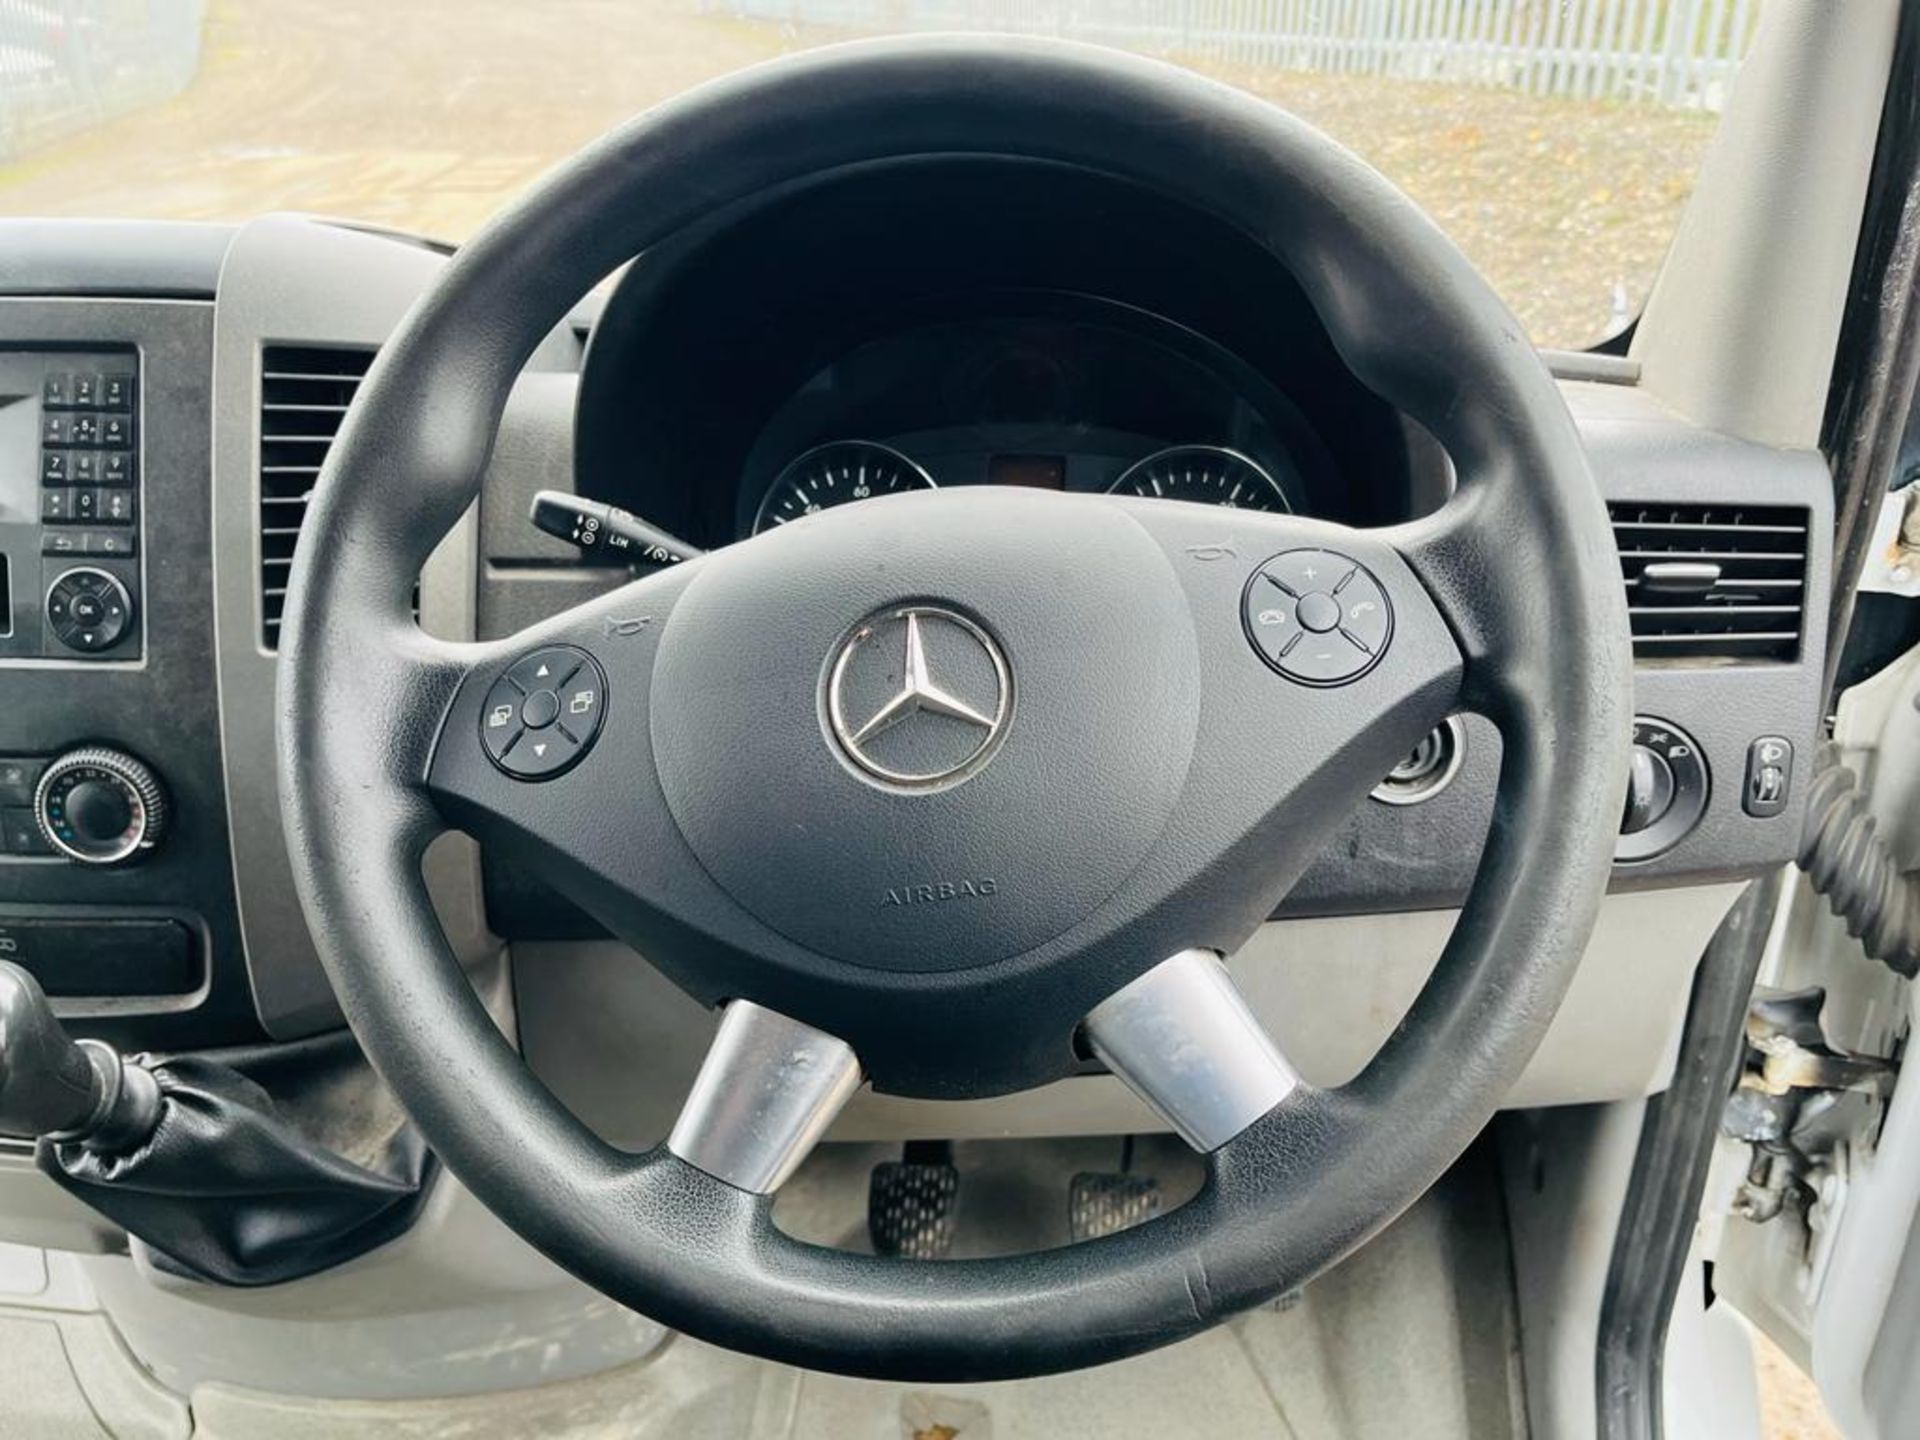 Mercedes-Benz Sprinter 313 2.1 CDI 3.5T LWB H/R 2014 '64 Reg' - Parking Sensors - Bluetooth Media - Image 19 of 27